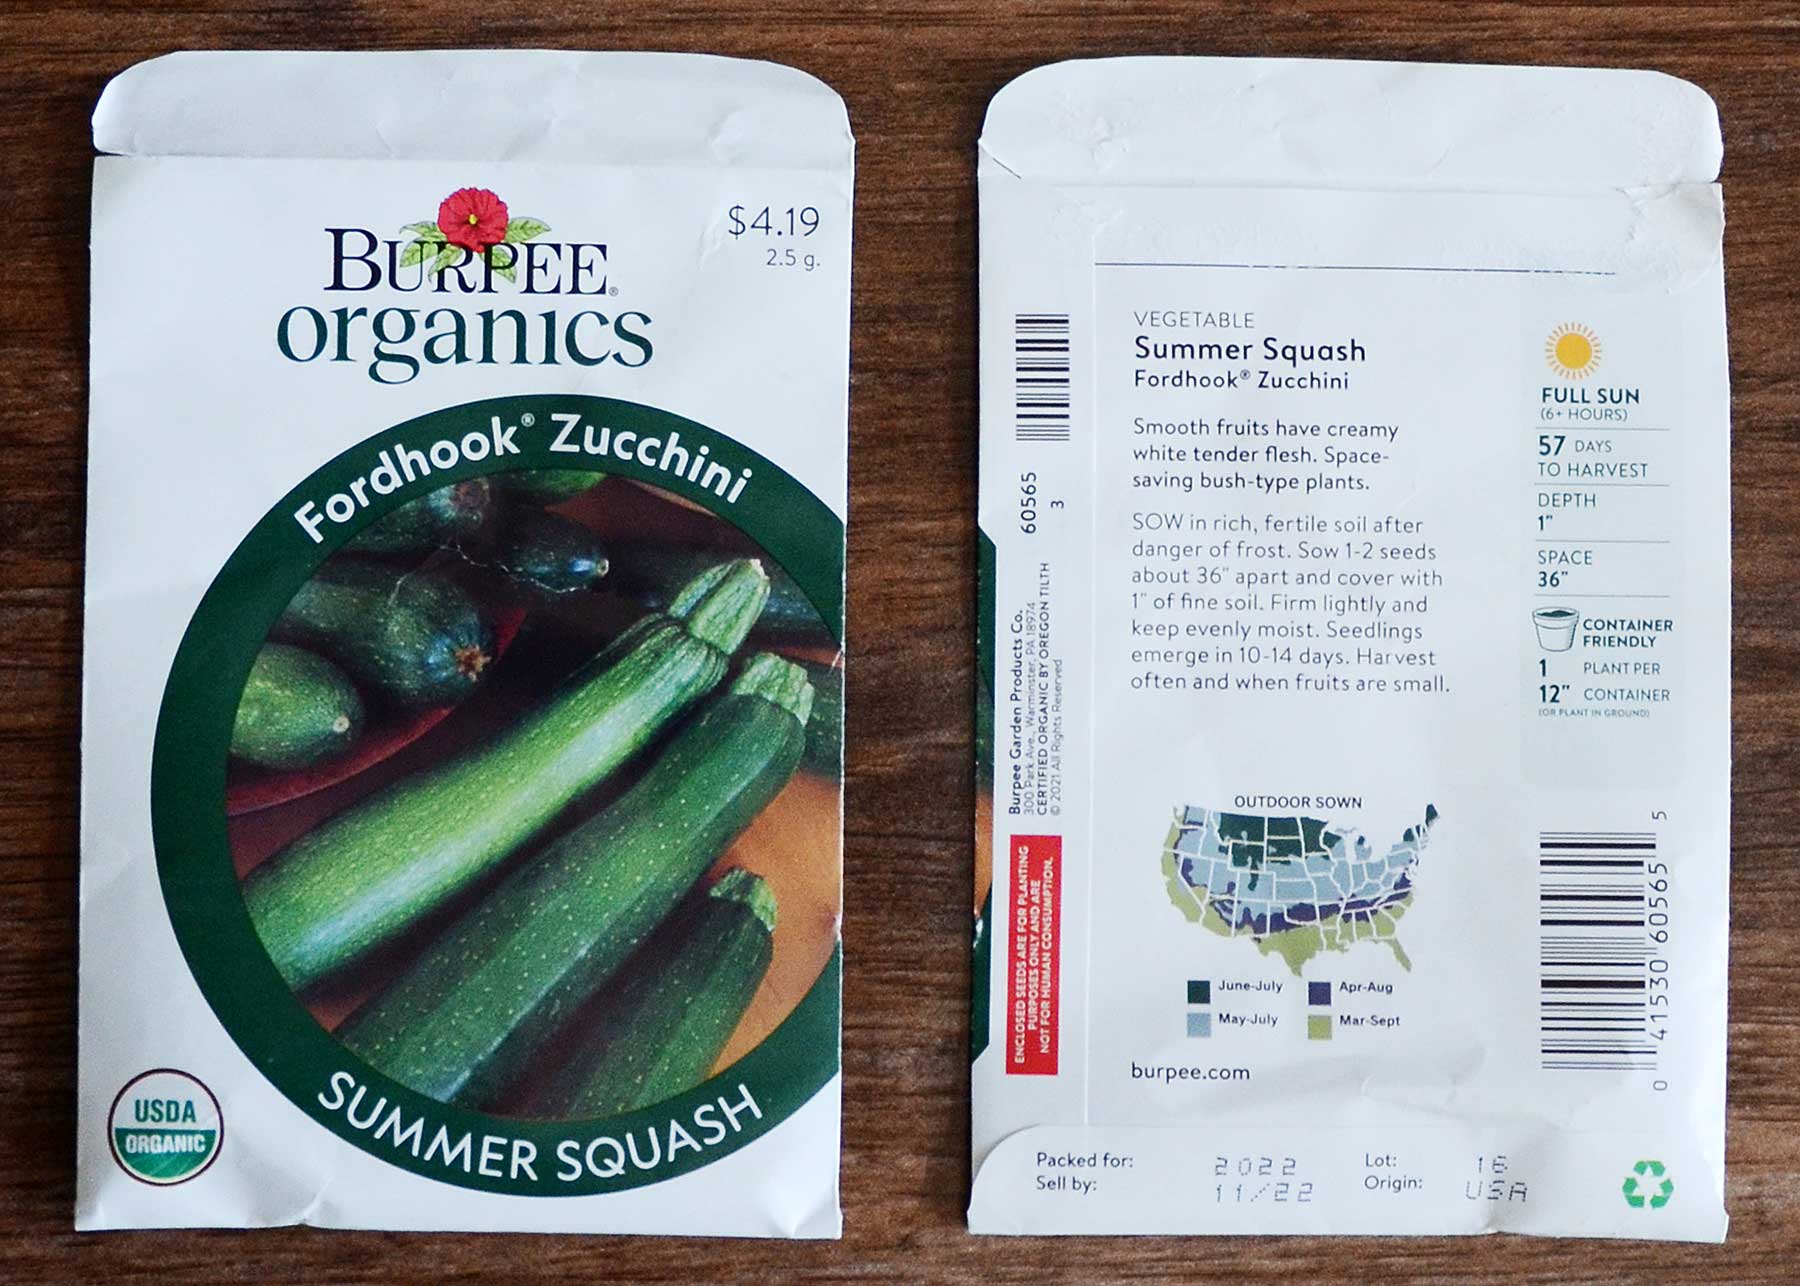 Burpee Organics Seed Packet, Fordhook Zucchini.